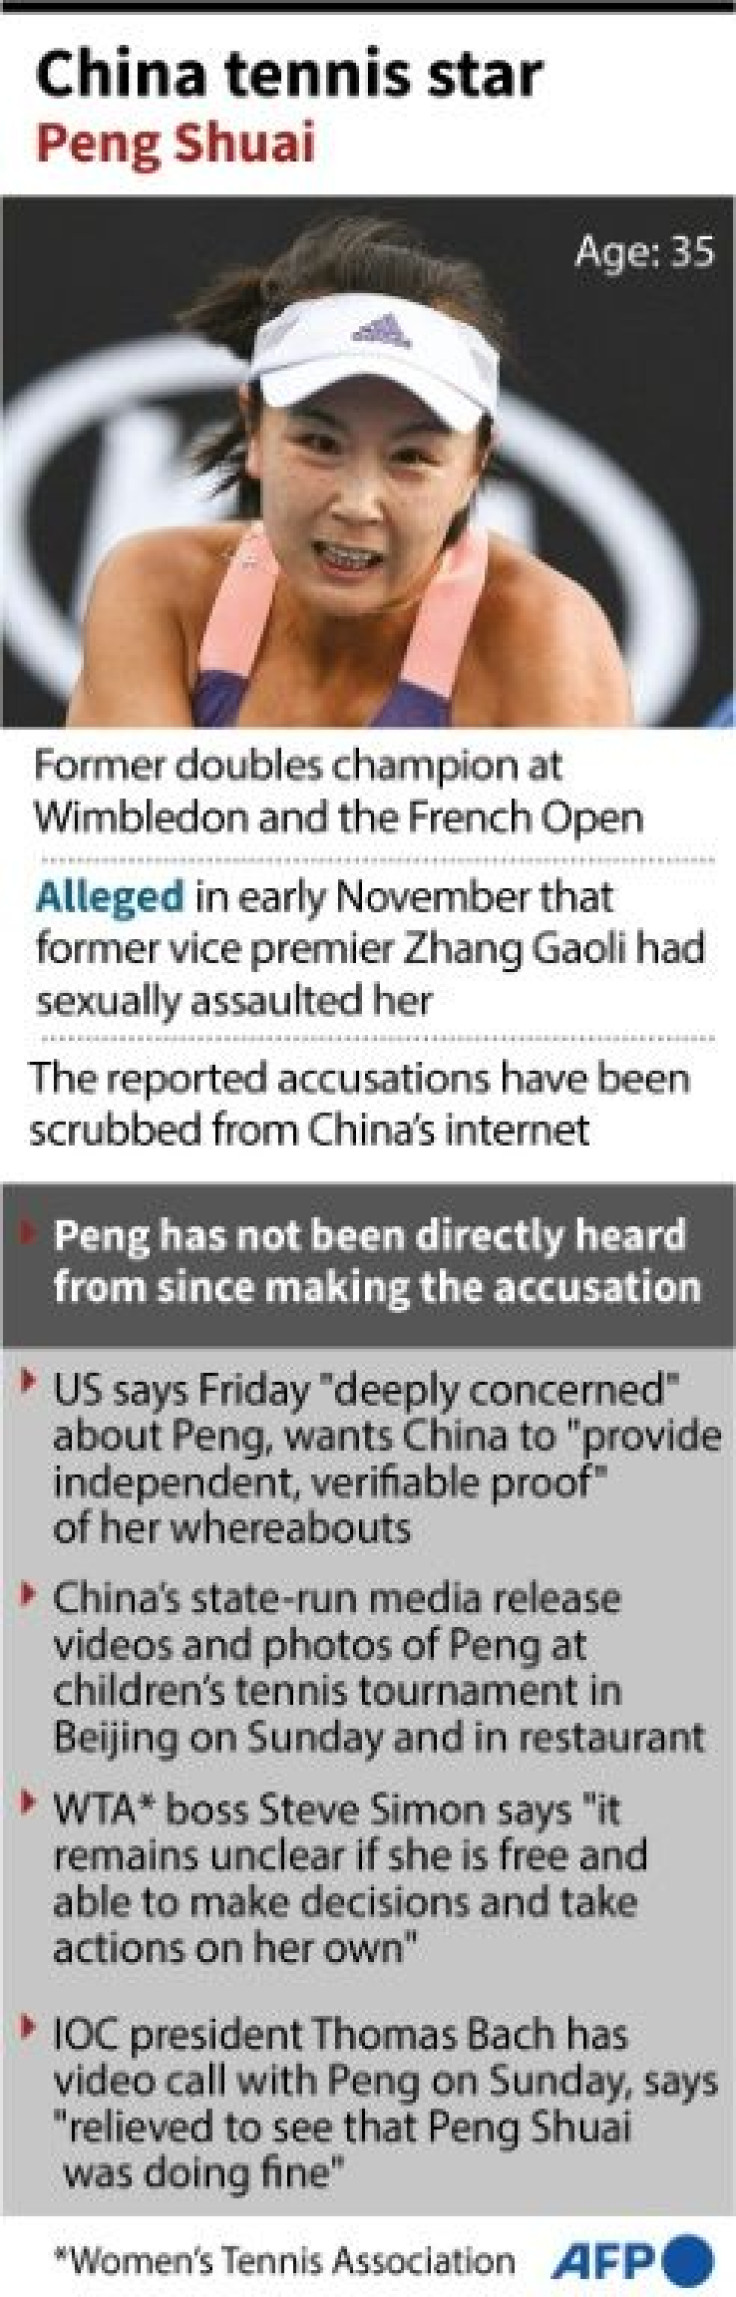 Factfile on Chinese tennis star Peng Shuai